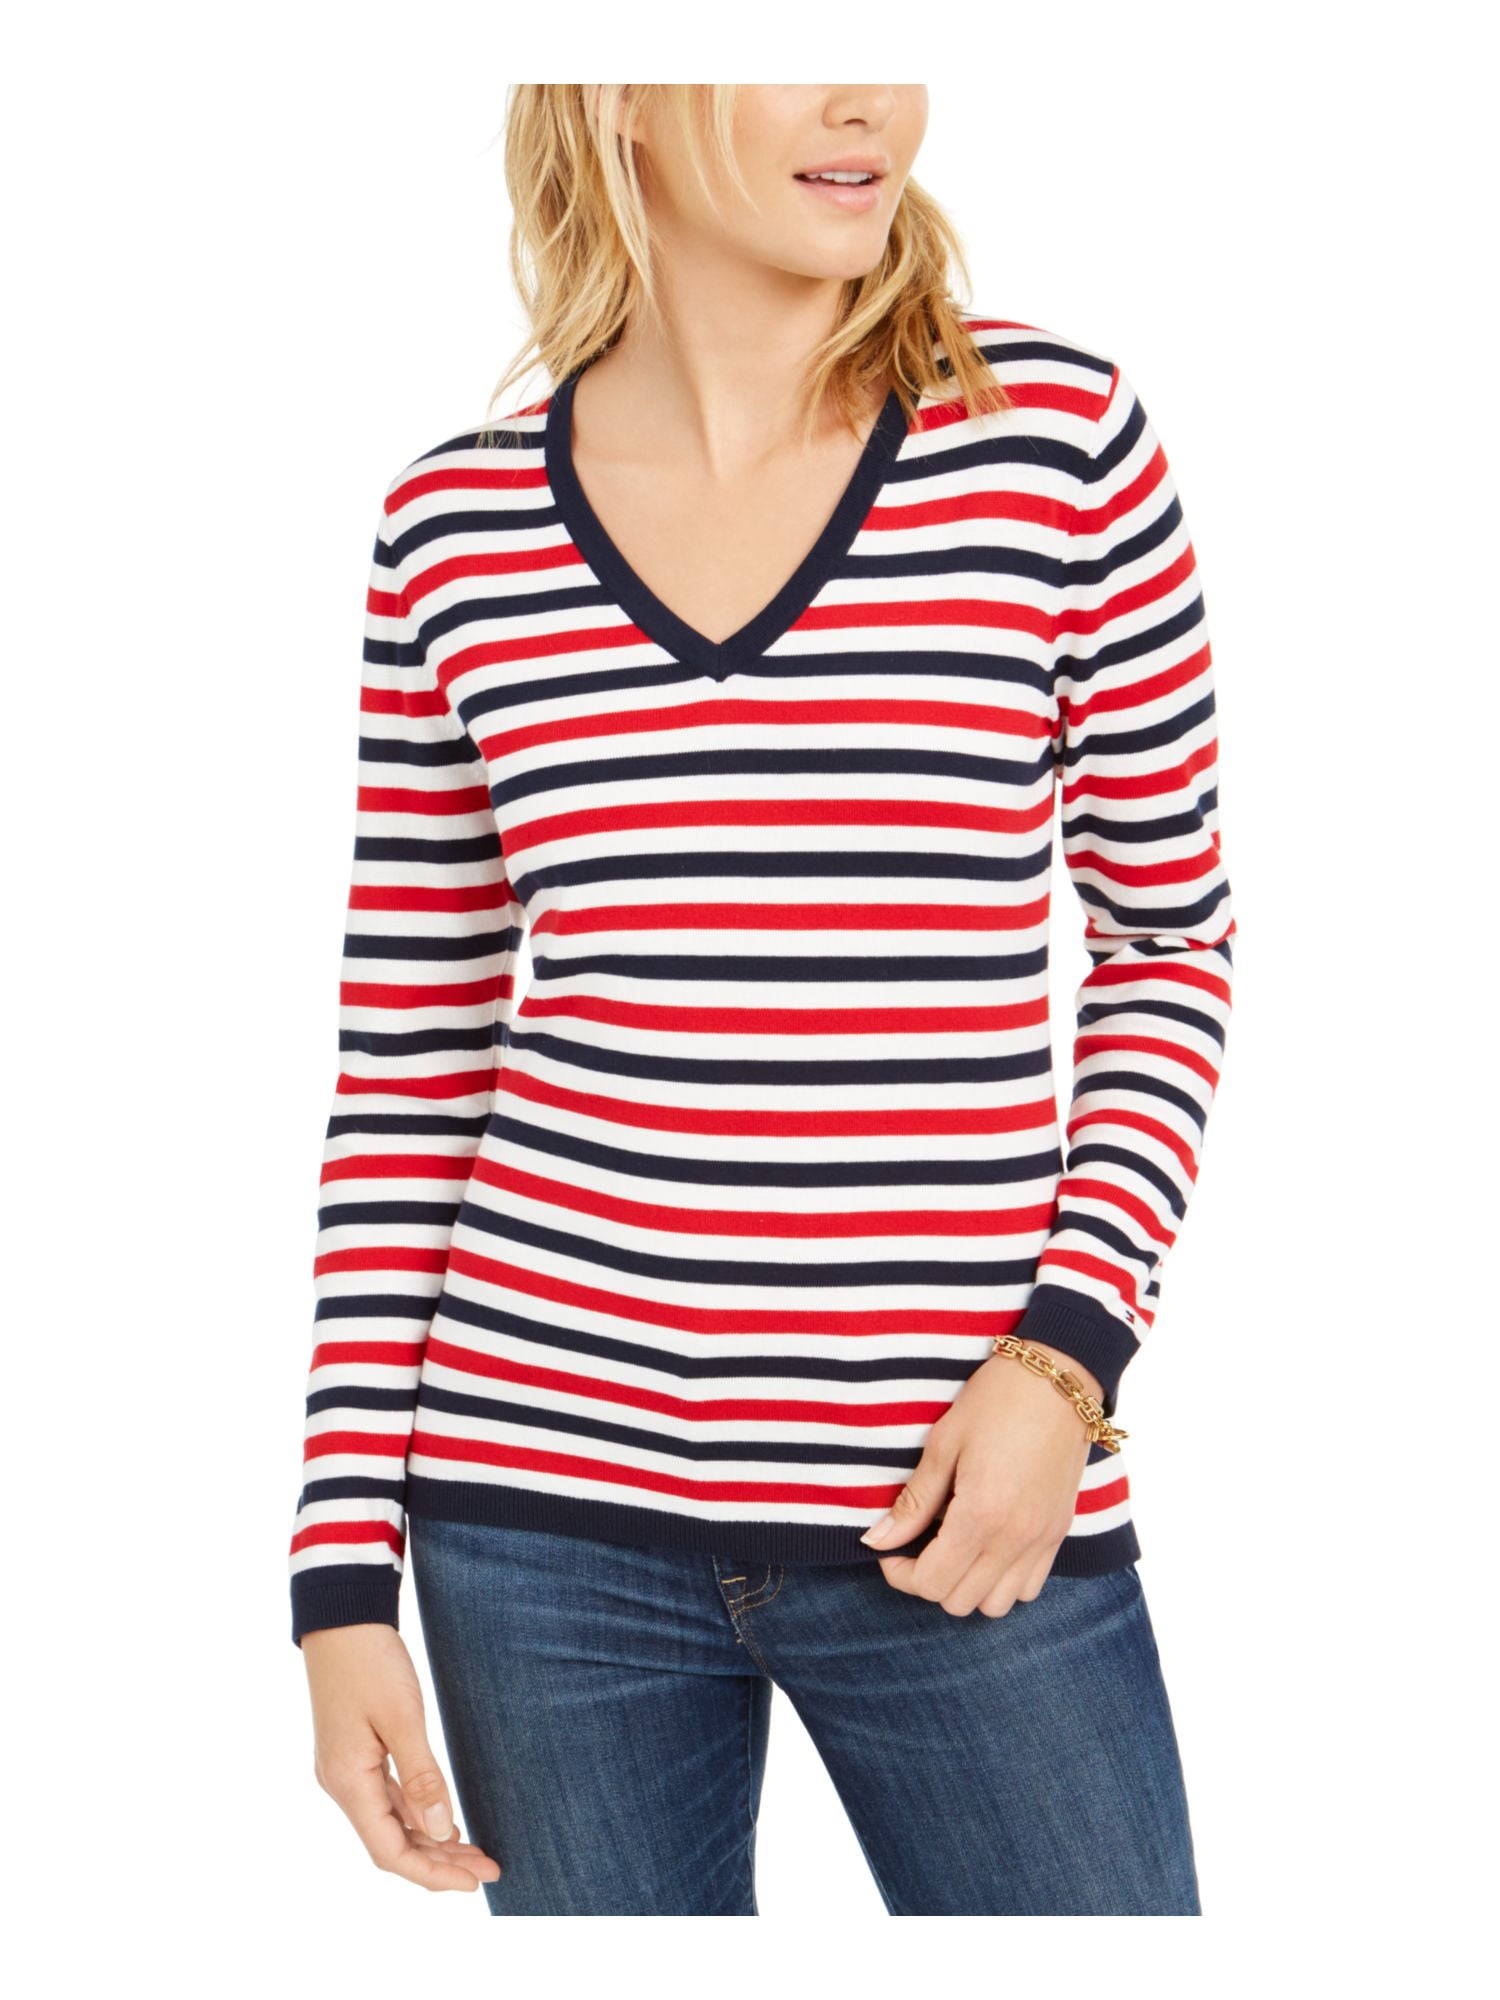 TOMMY HILFIGER Blue Striped Long Sleeve V Neck Sweater Size: XL - Walmart.com